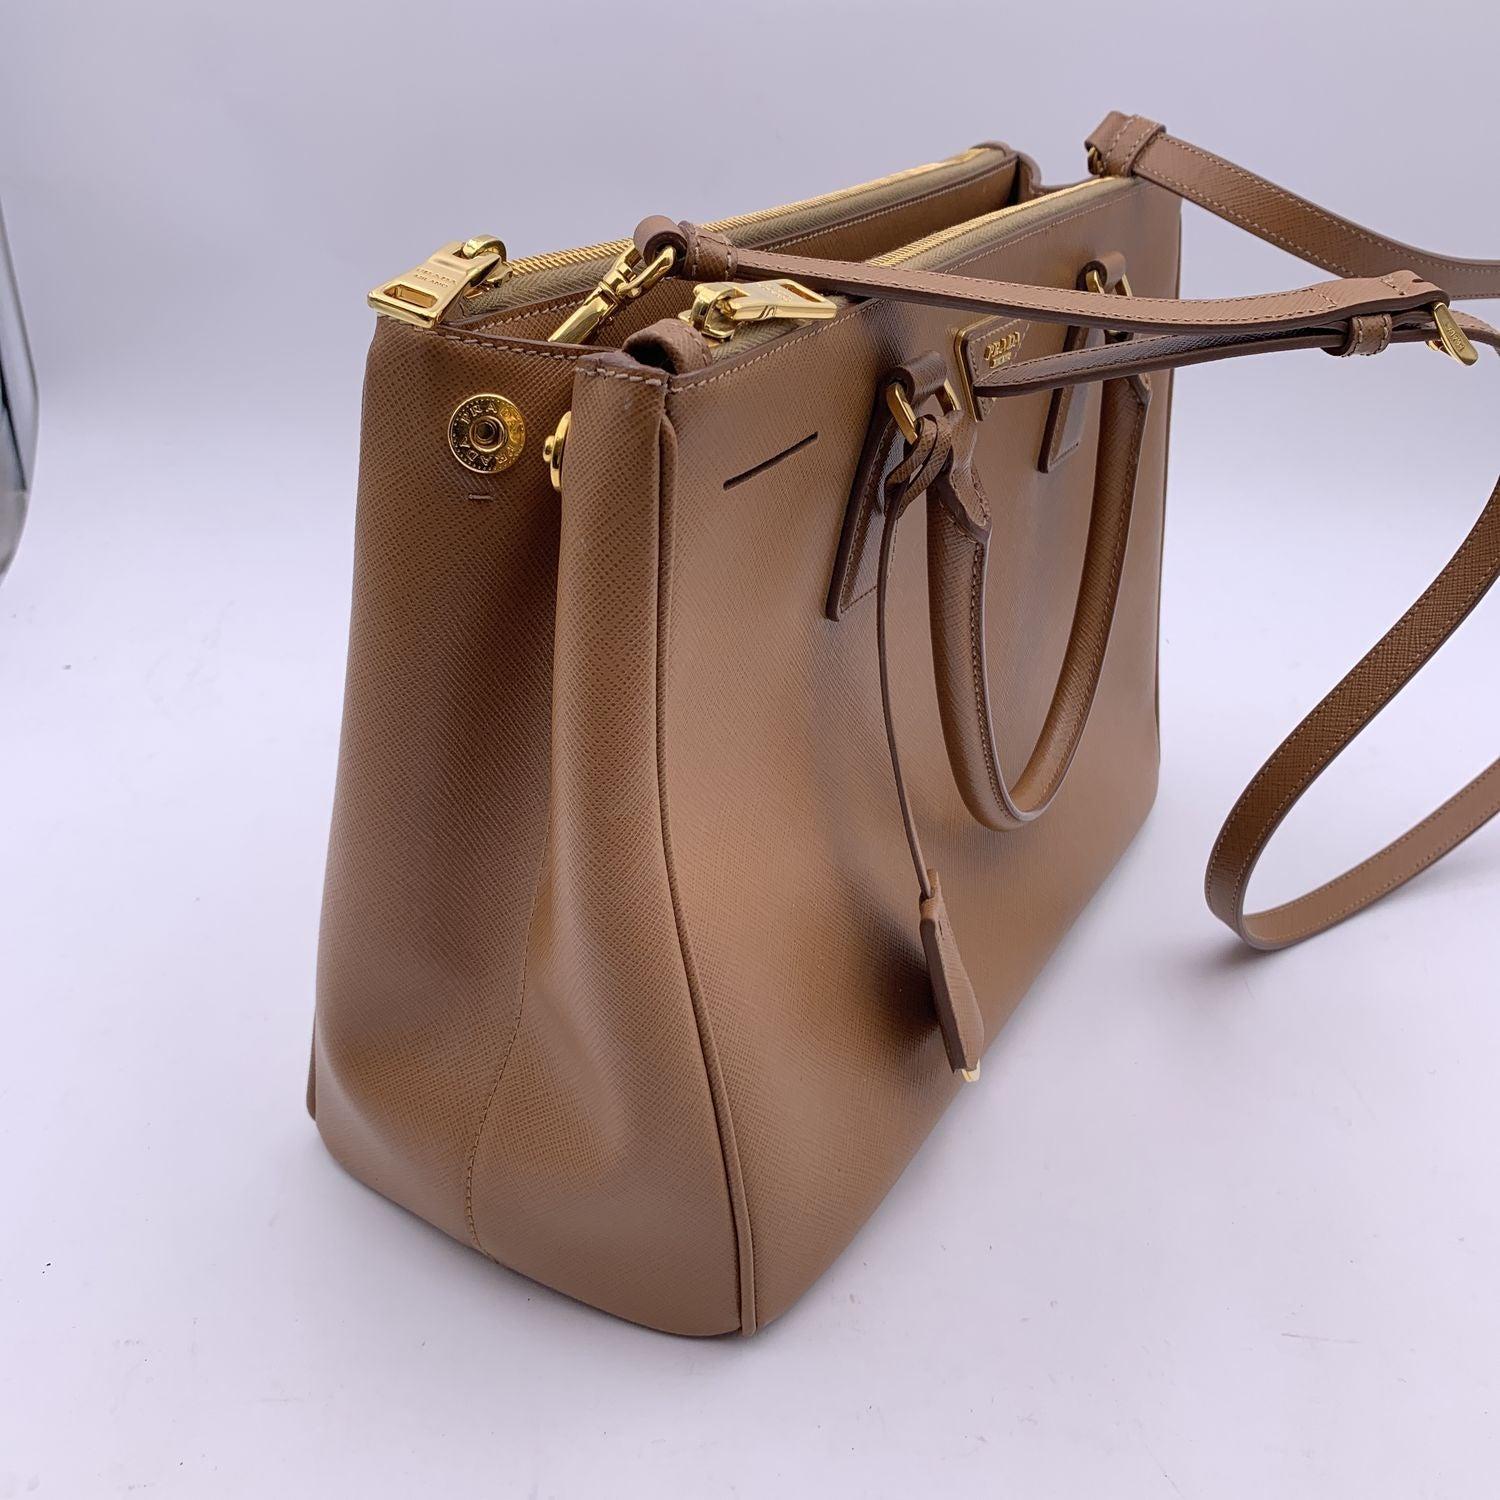 Women's Prada Tan Beige Saffiano Leather Galleria Tote Satchel Bag